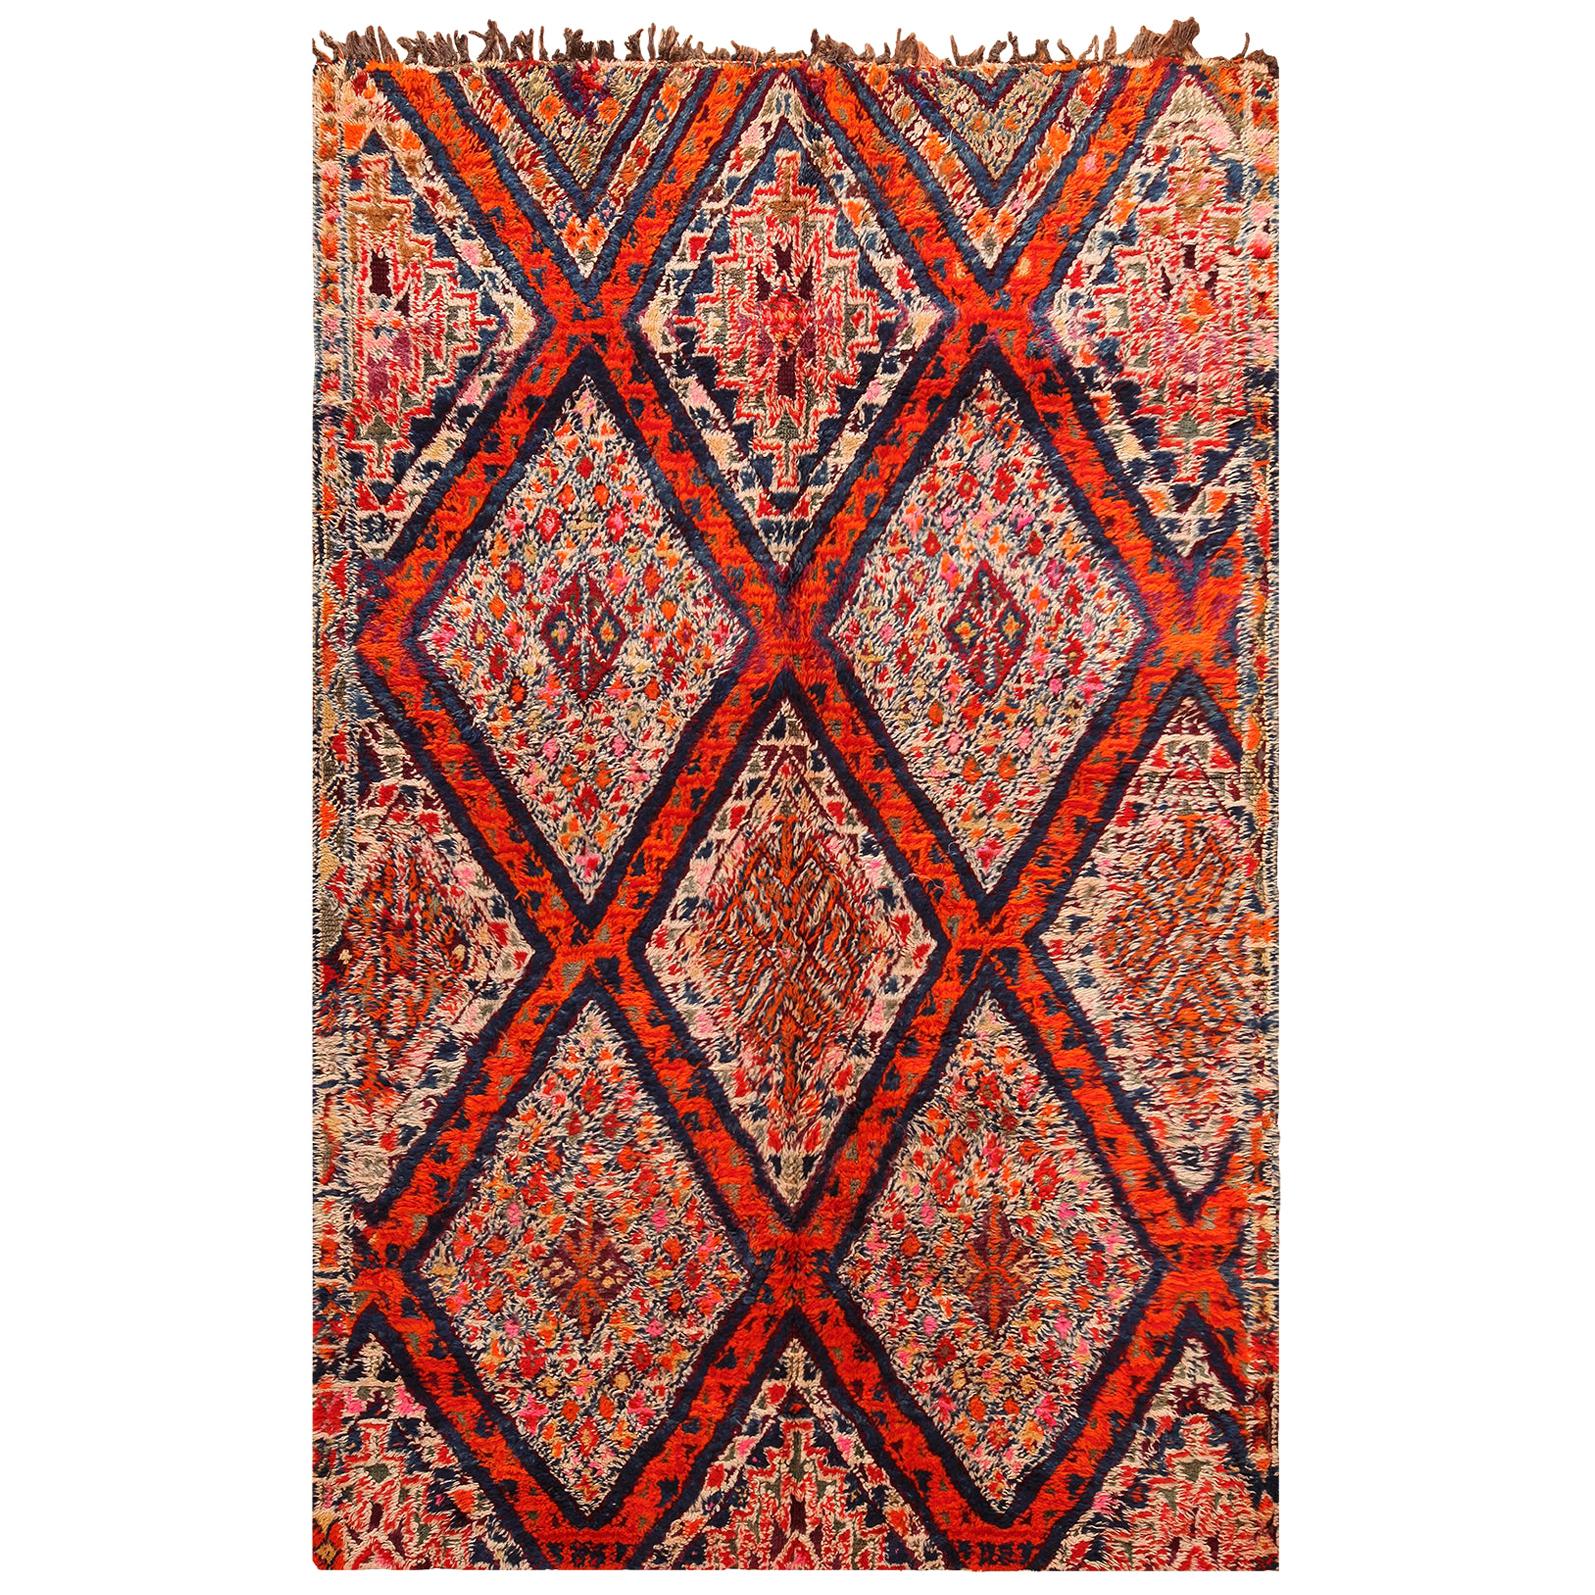 Folk Art Vintage Geometric Moroccan Rug. Size: 6 ft. 4 in x 9 ft. 9 in